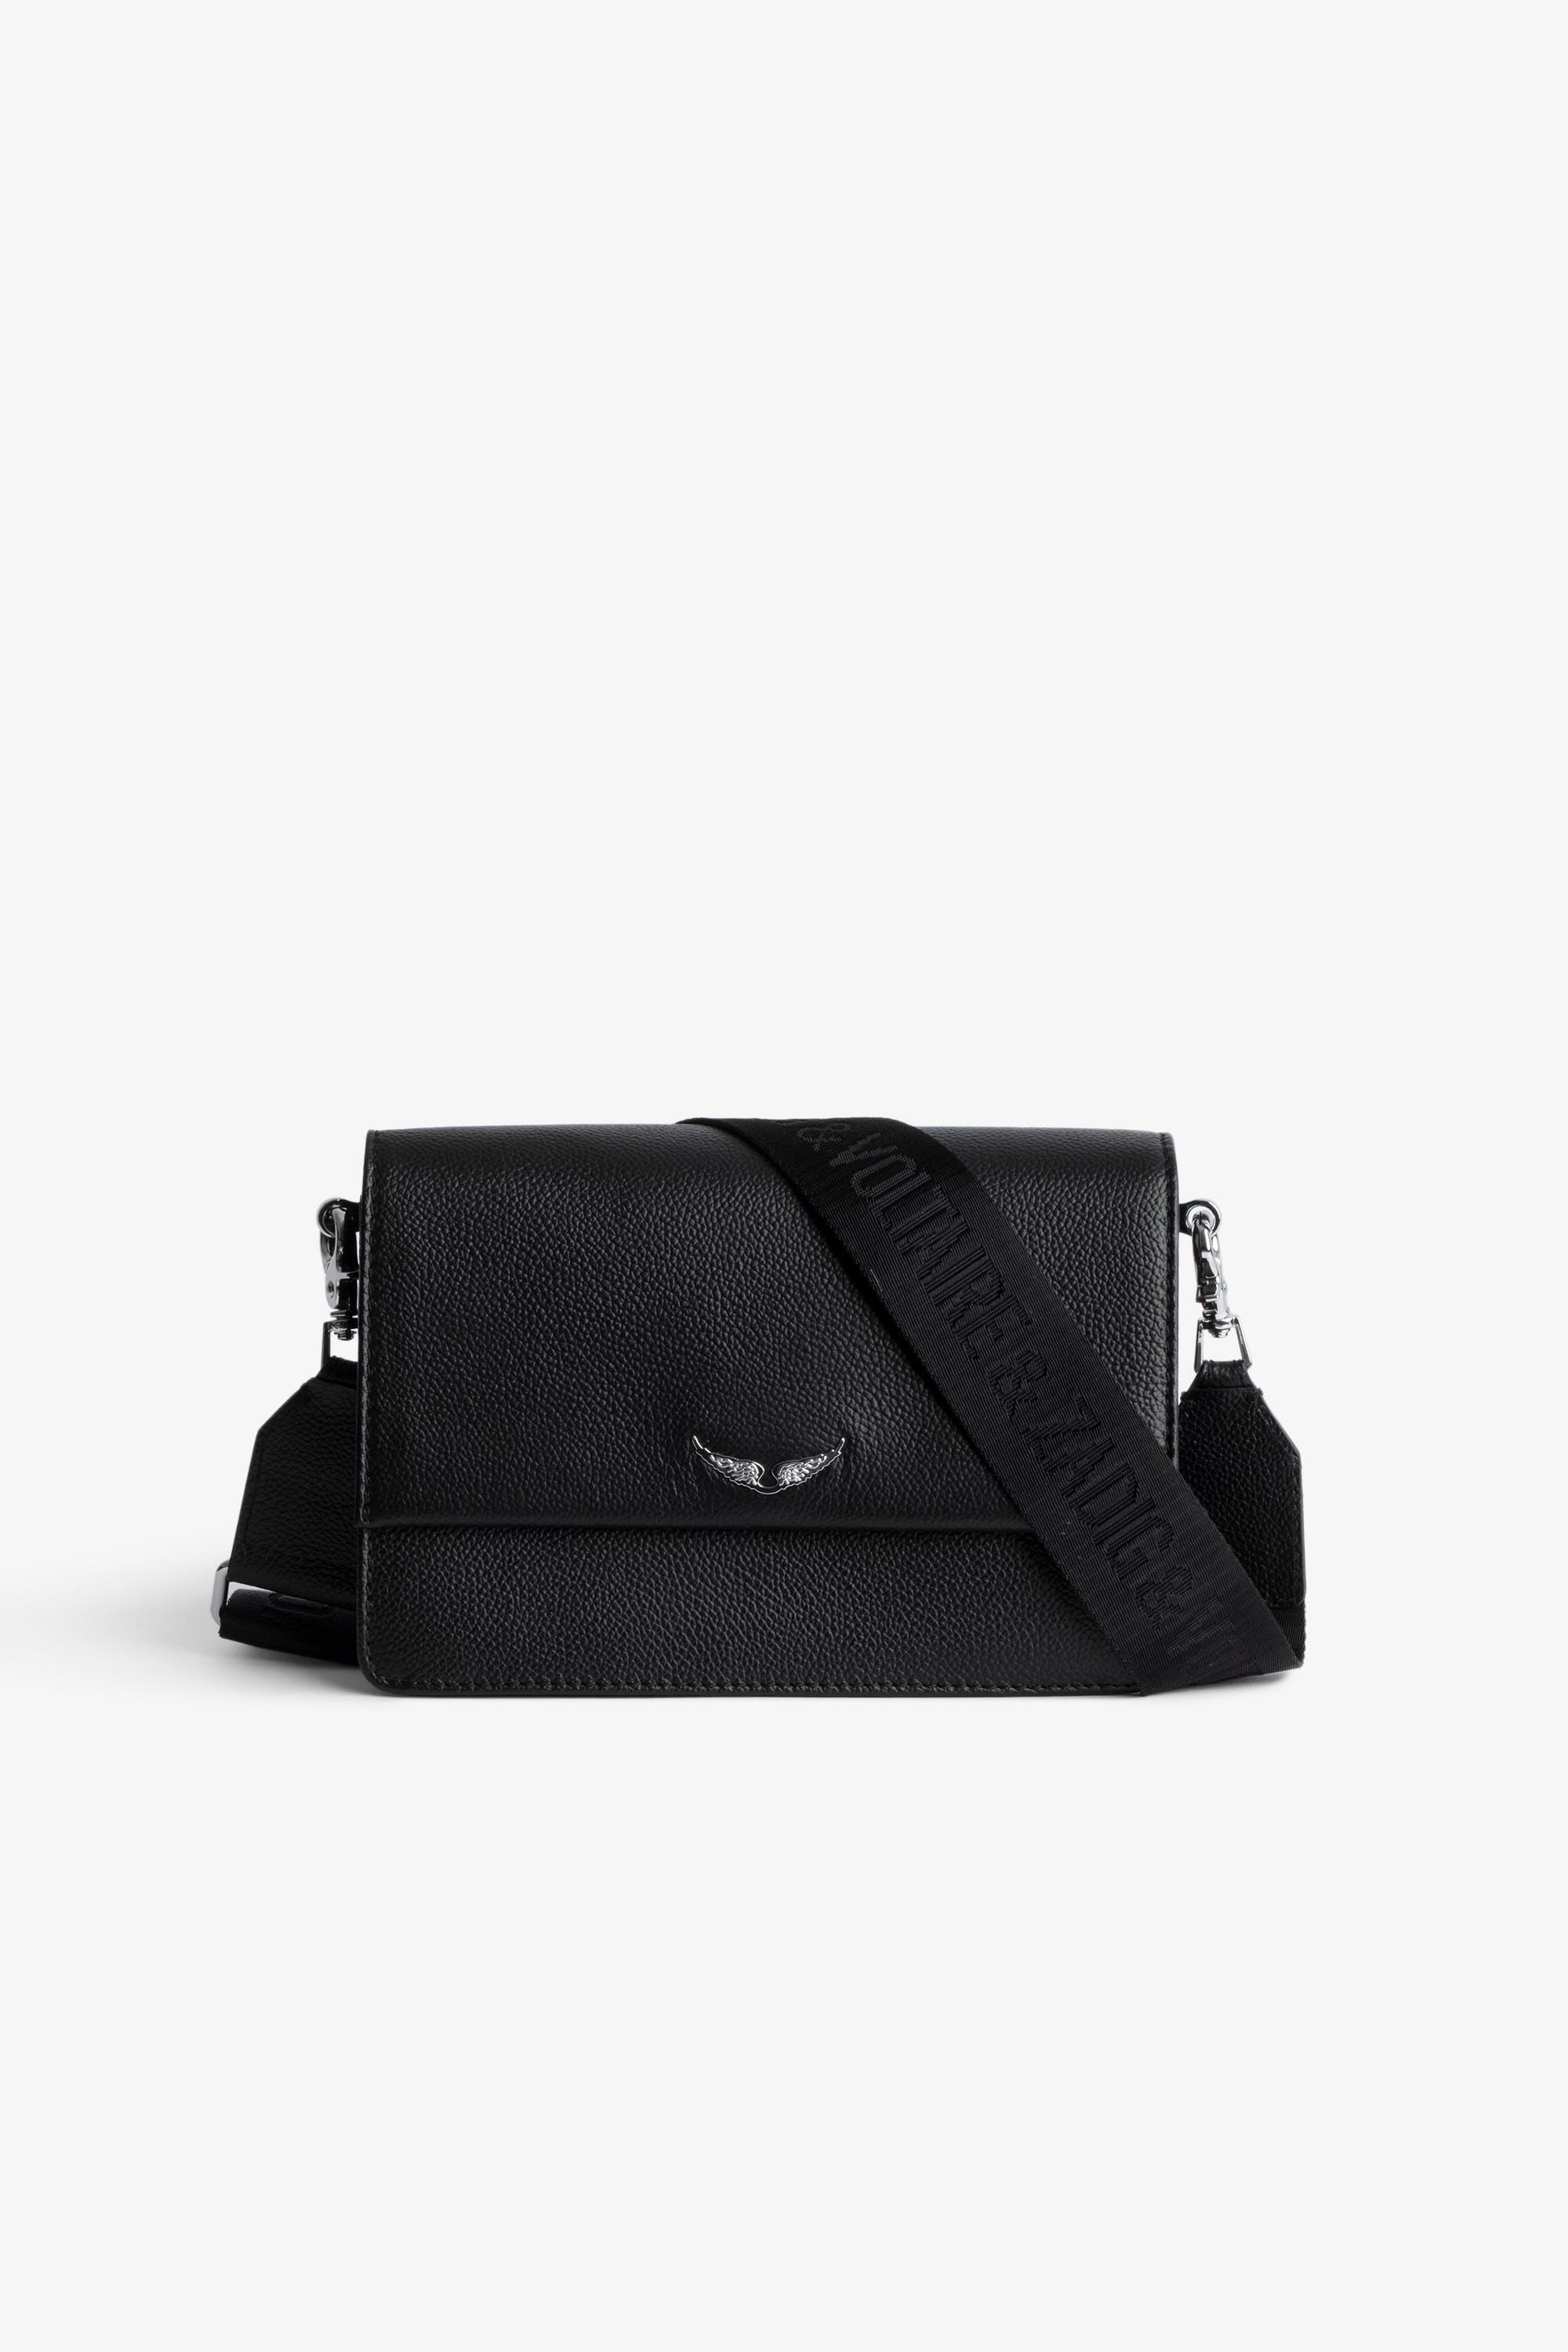 Zadig & Voltaire Lolita Wings Bag in Black